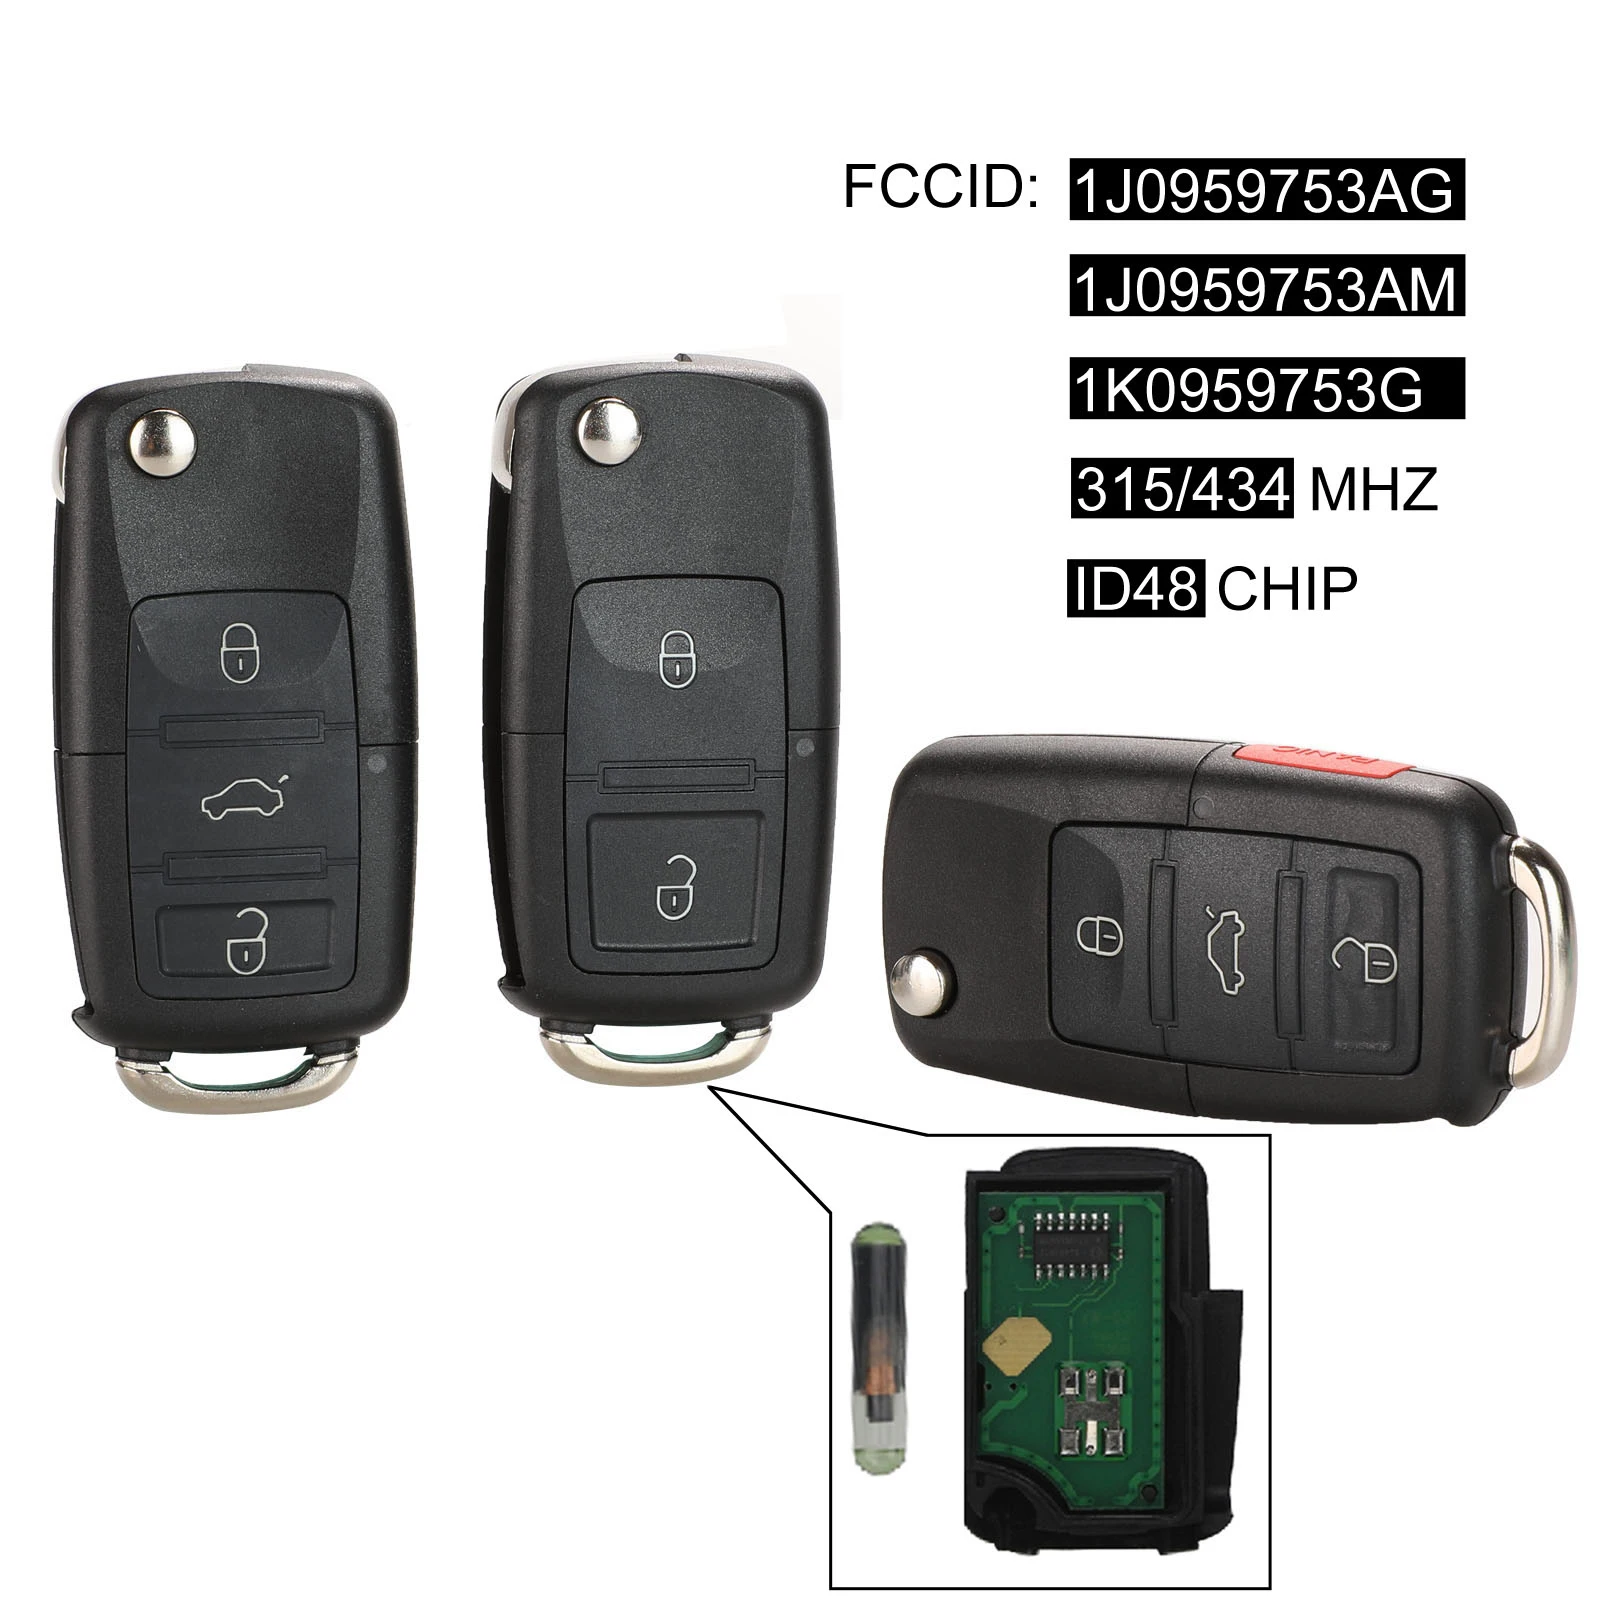 Jingyuqin 2/3/4 Taste Flip Remote Key Fob 434MHz ID48 Chip Für VW Beetle Bora Golf Passat Polo Transporter T5 1J 0 959 753 AG